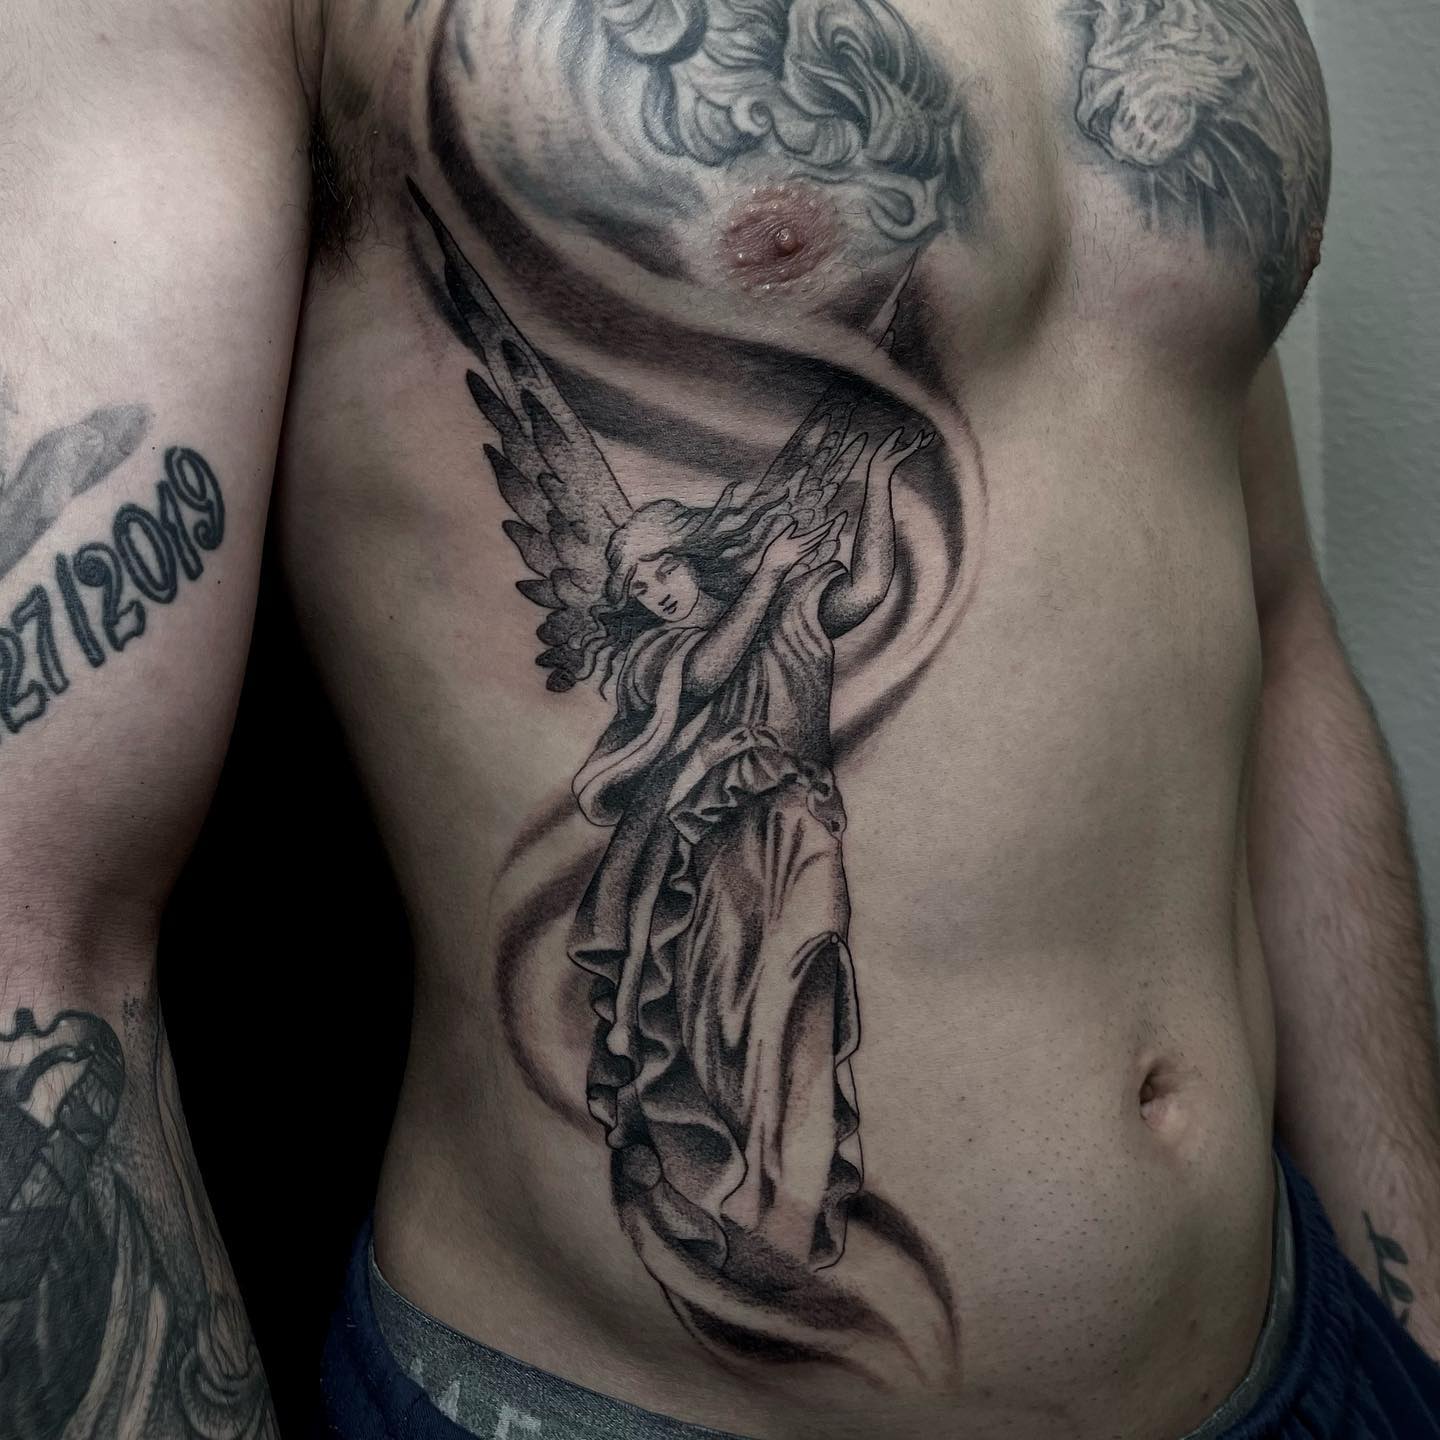 Rib Tattoos for Men: 30 Inspirational Designs for Your Next Tattoo - 100 Tattoos